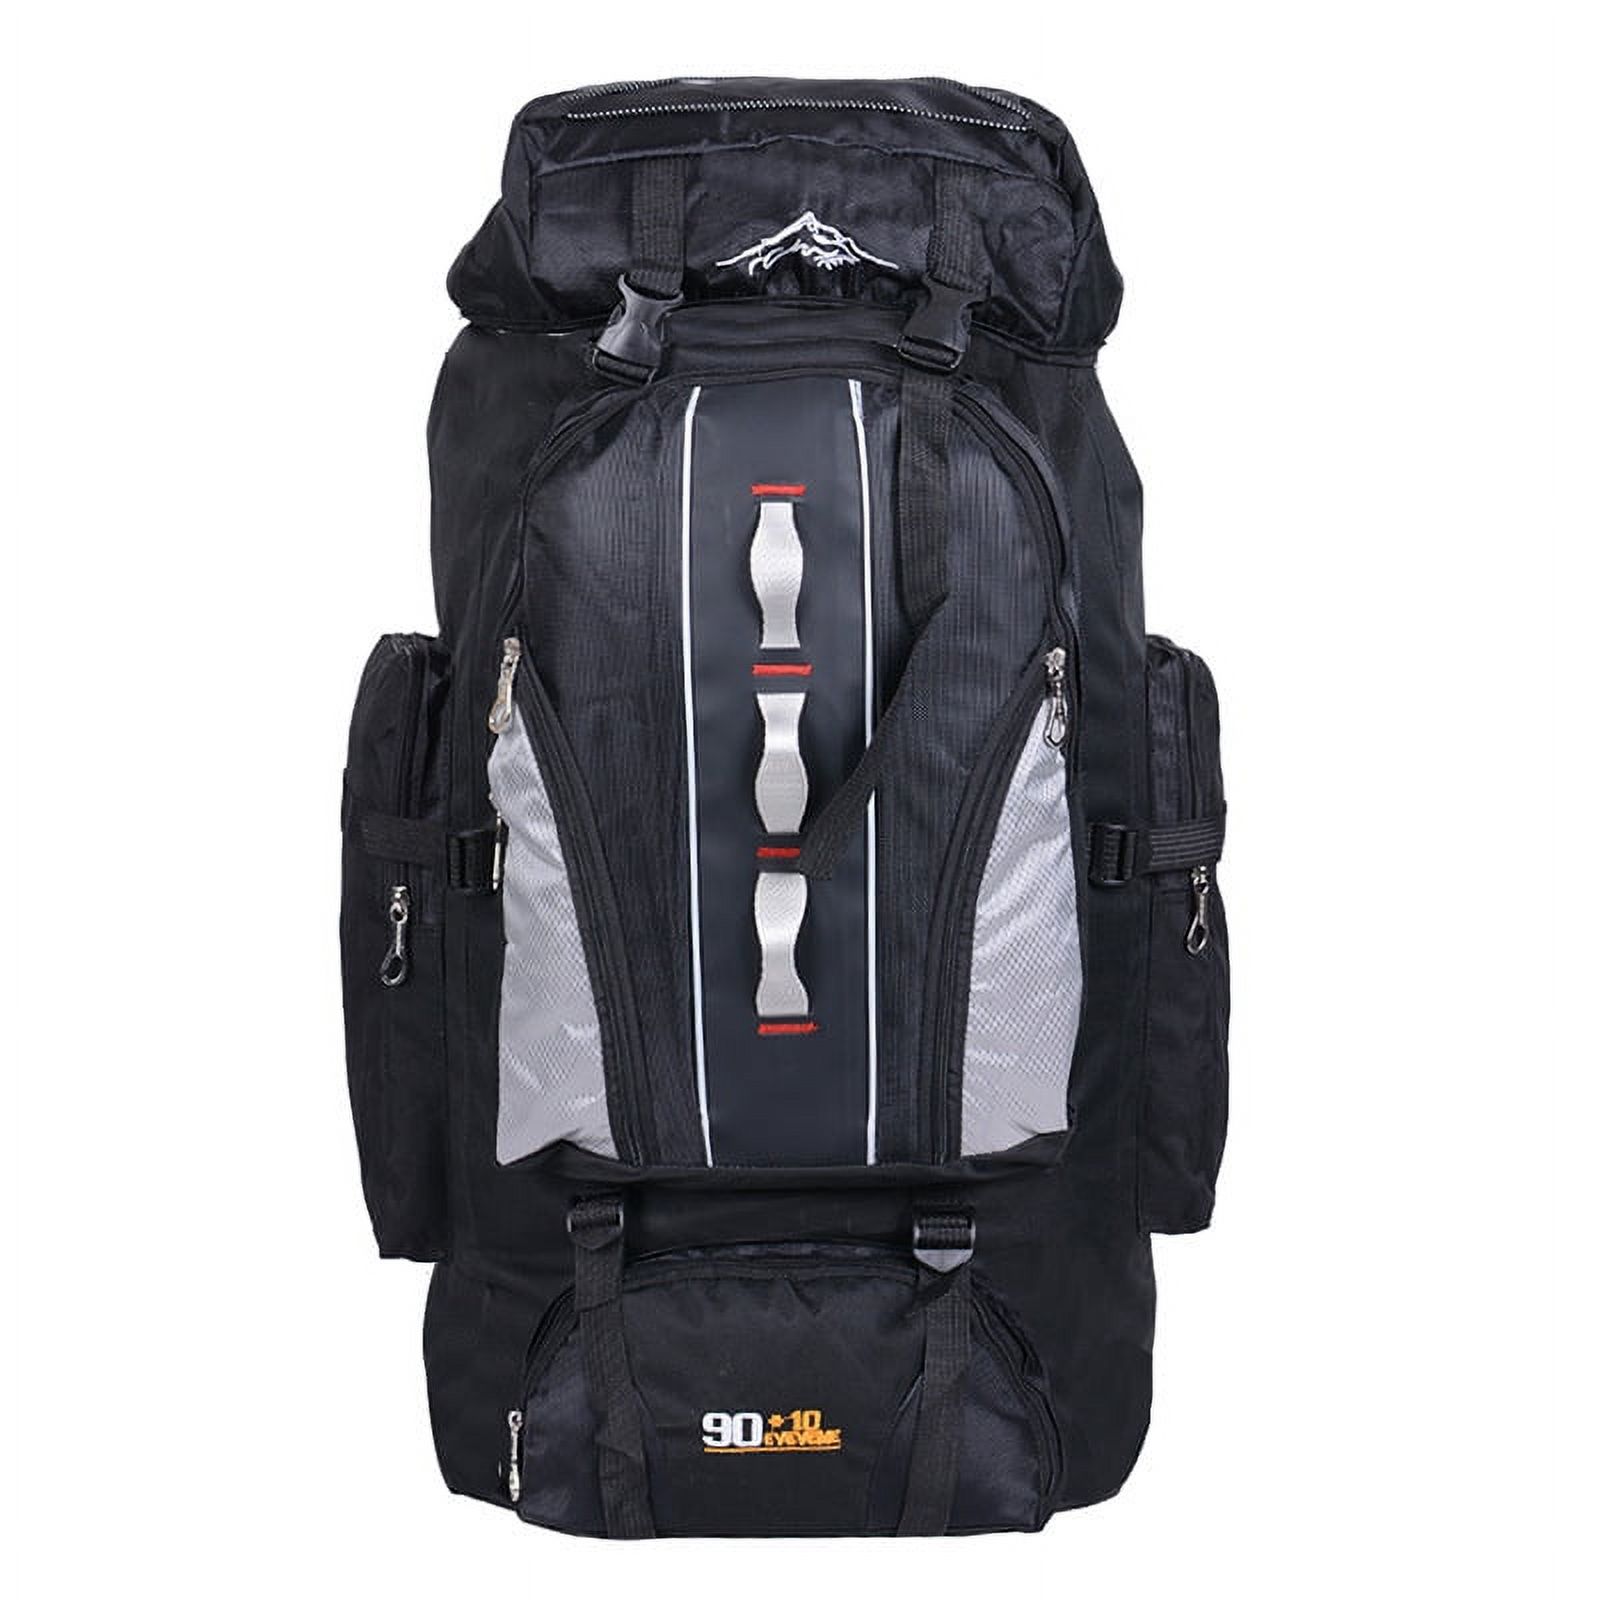 Toyella Waterproof Nylon Outdoor Hiking Bag Black 100L - image 1 of 6